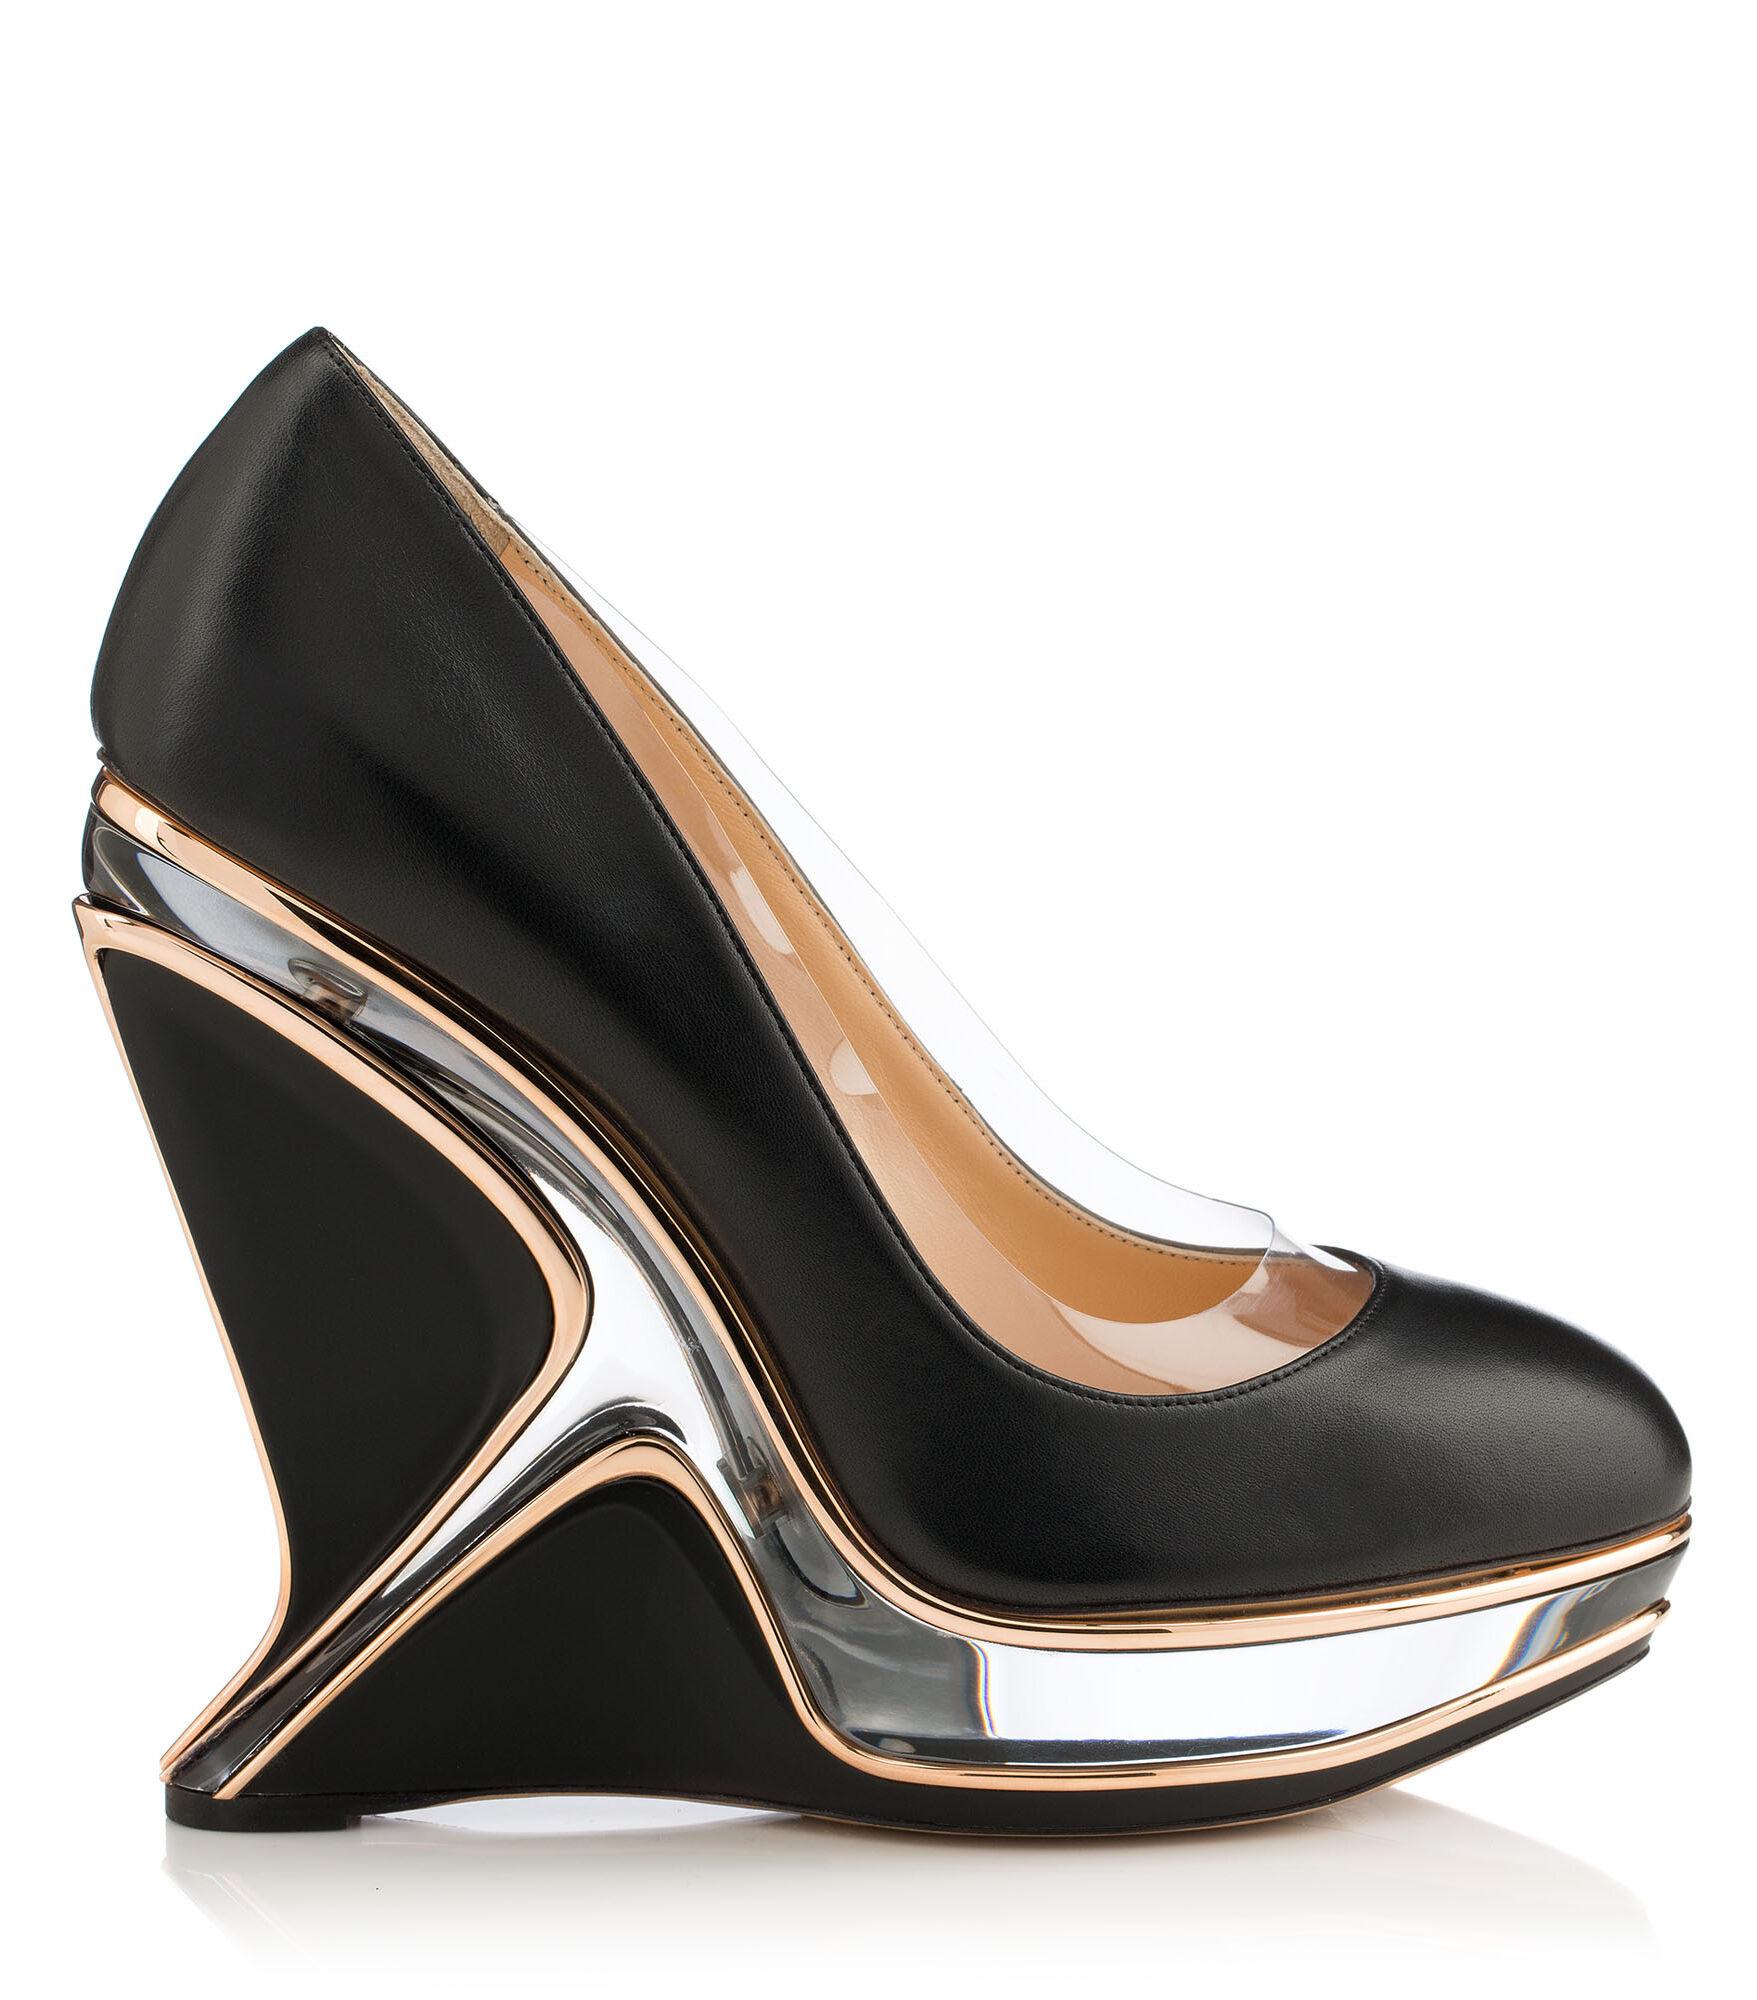 Charlotte Olympia Leather Zaha Hadid Shoe in Black - Lyst